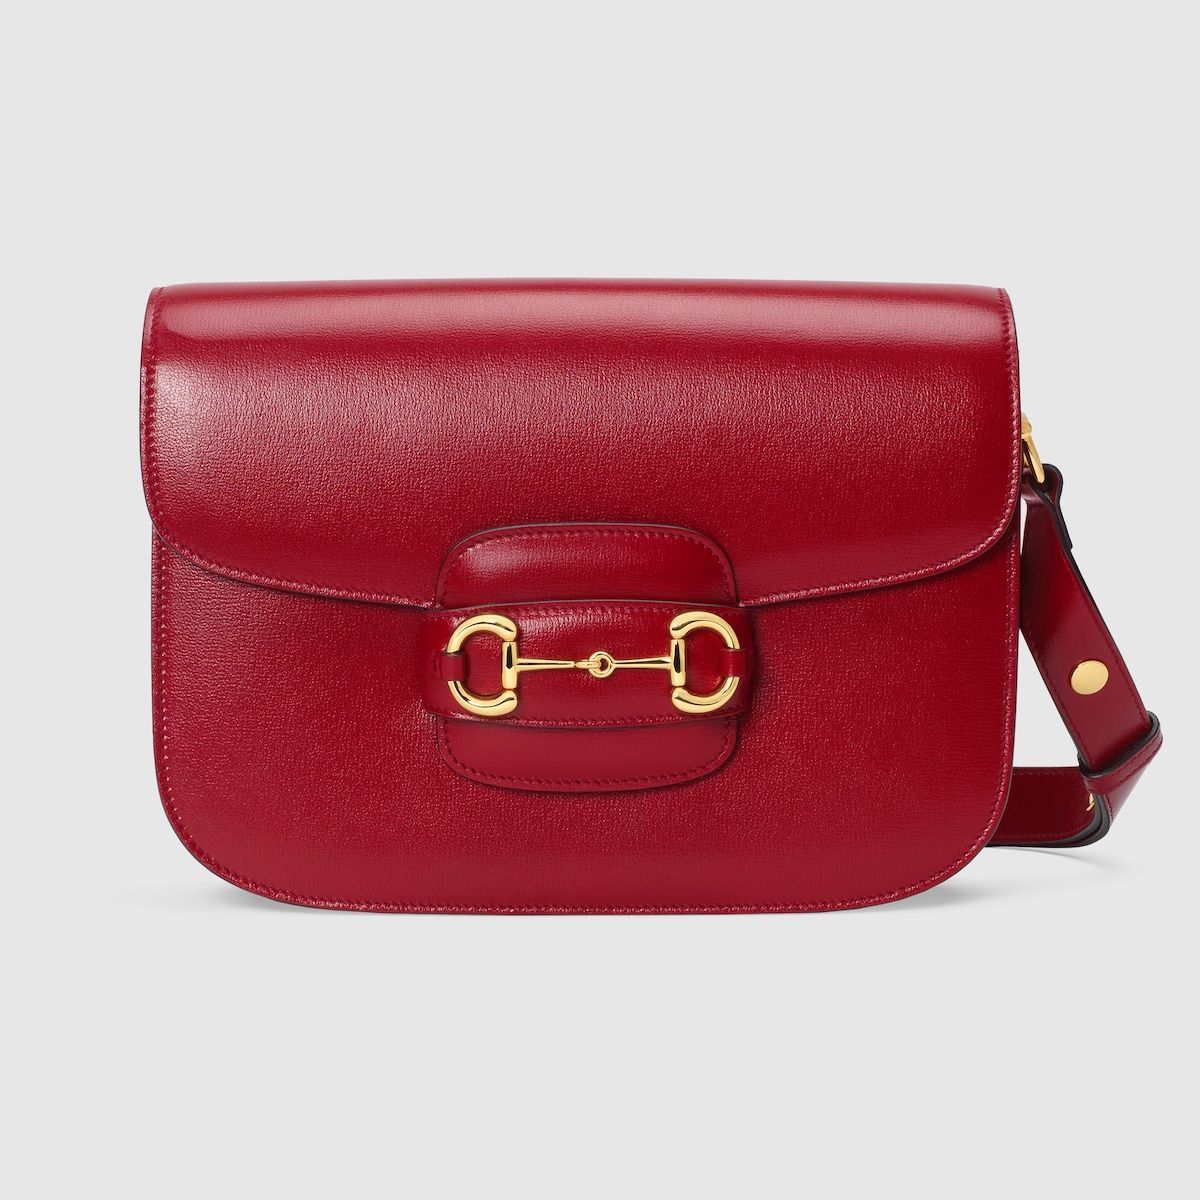 Josie Black Leather Chain Bag | Black leather crossbody bag, Classy purses,  Studded bag